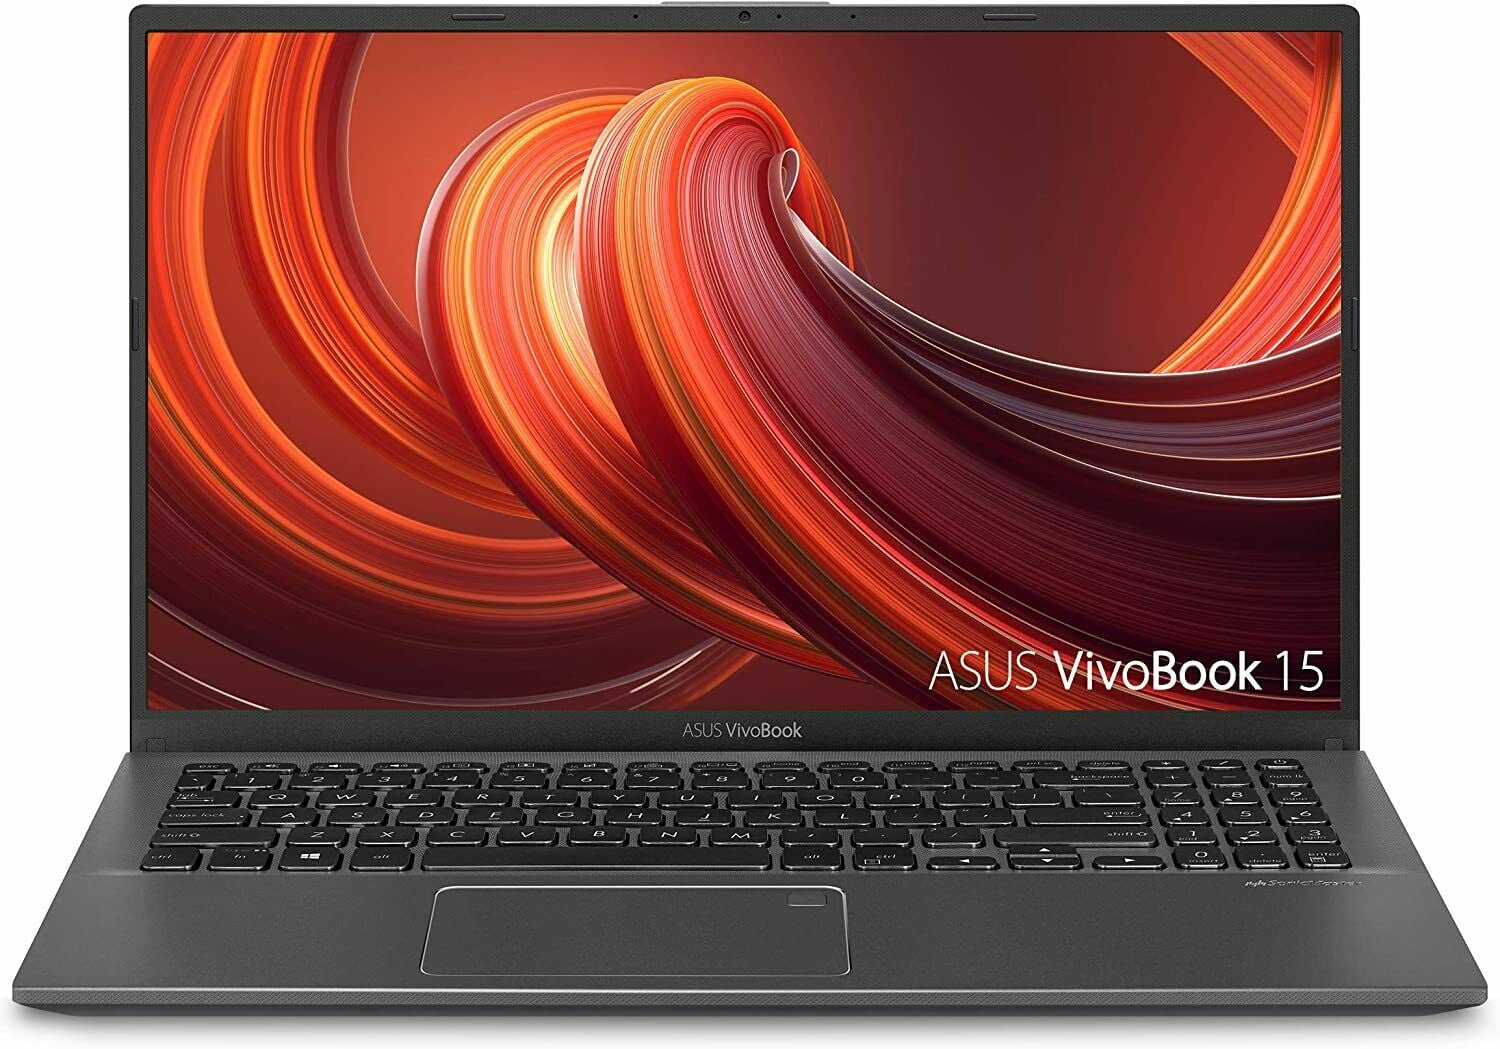 ASUS VivoBook 15 Thin and Light Laptop, 15.6” FHD Display, Intel i3-1005G1  CPU, 8GB RAM, 128GB SSD, Backlit Keyboard, Fingerprint, Windows 10 Home in 